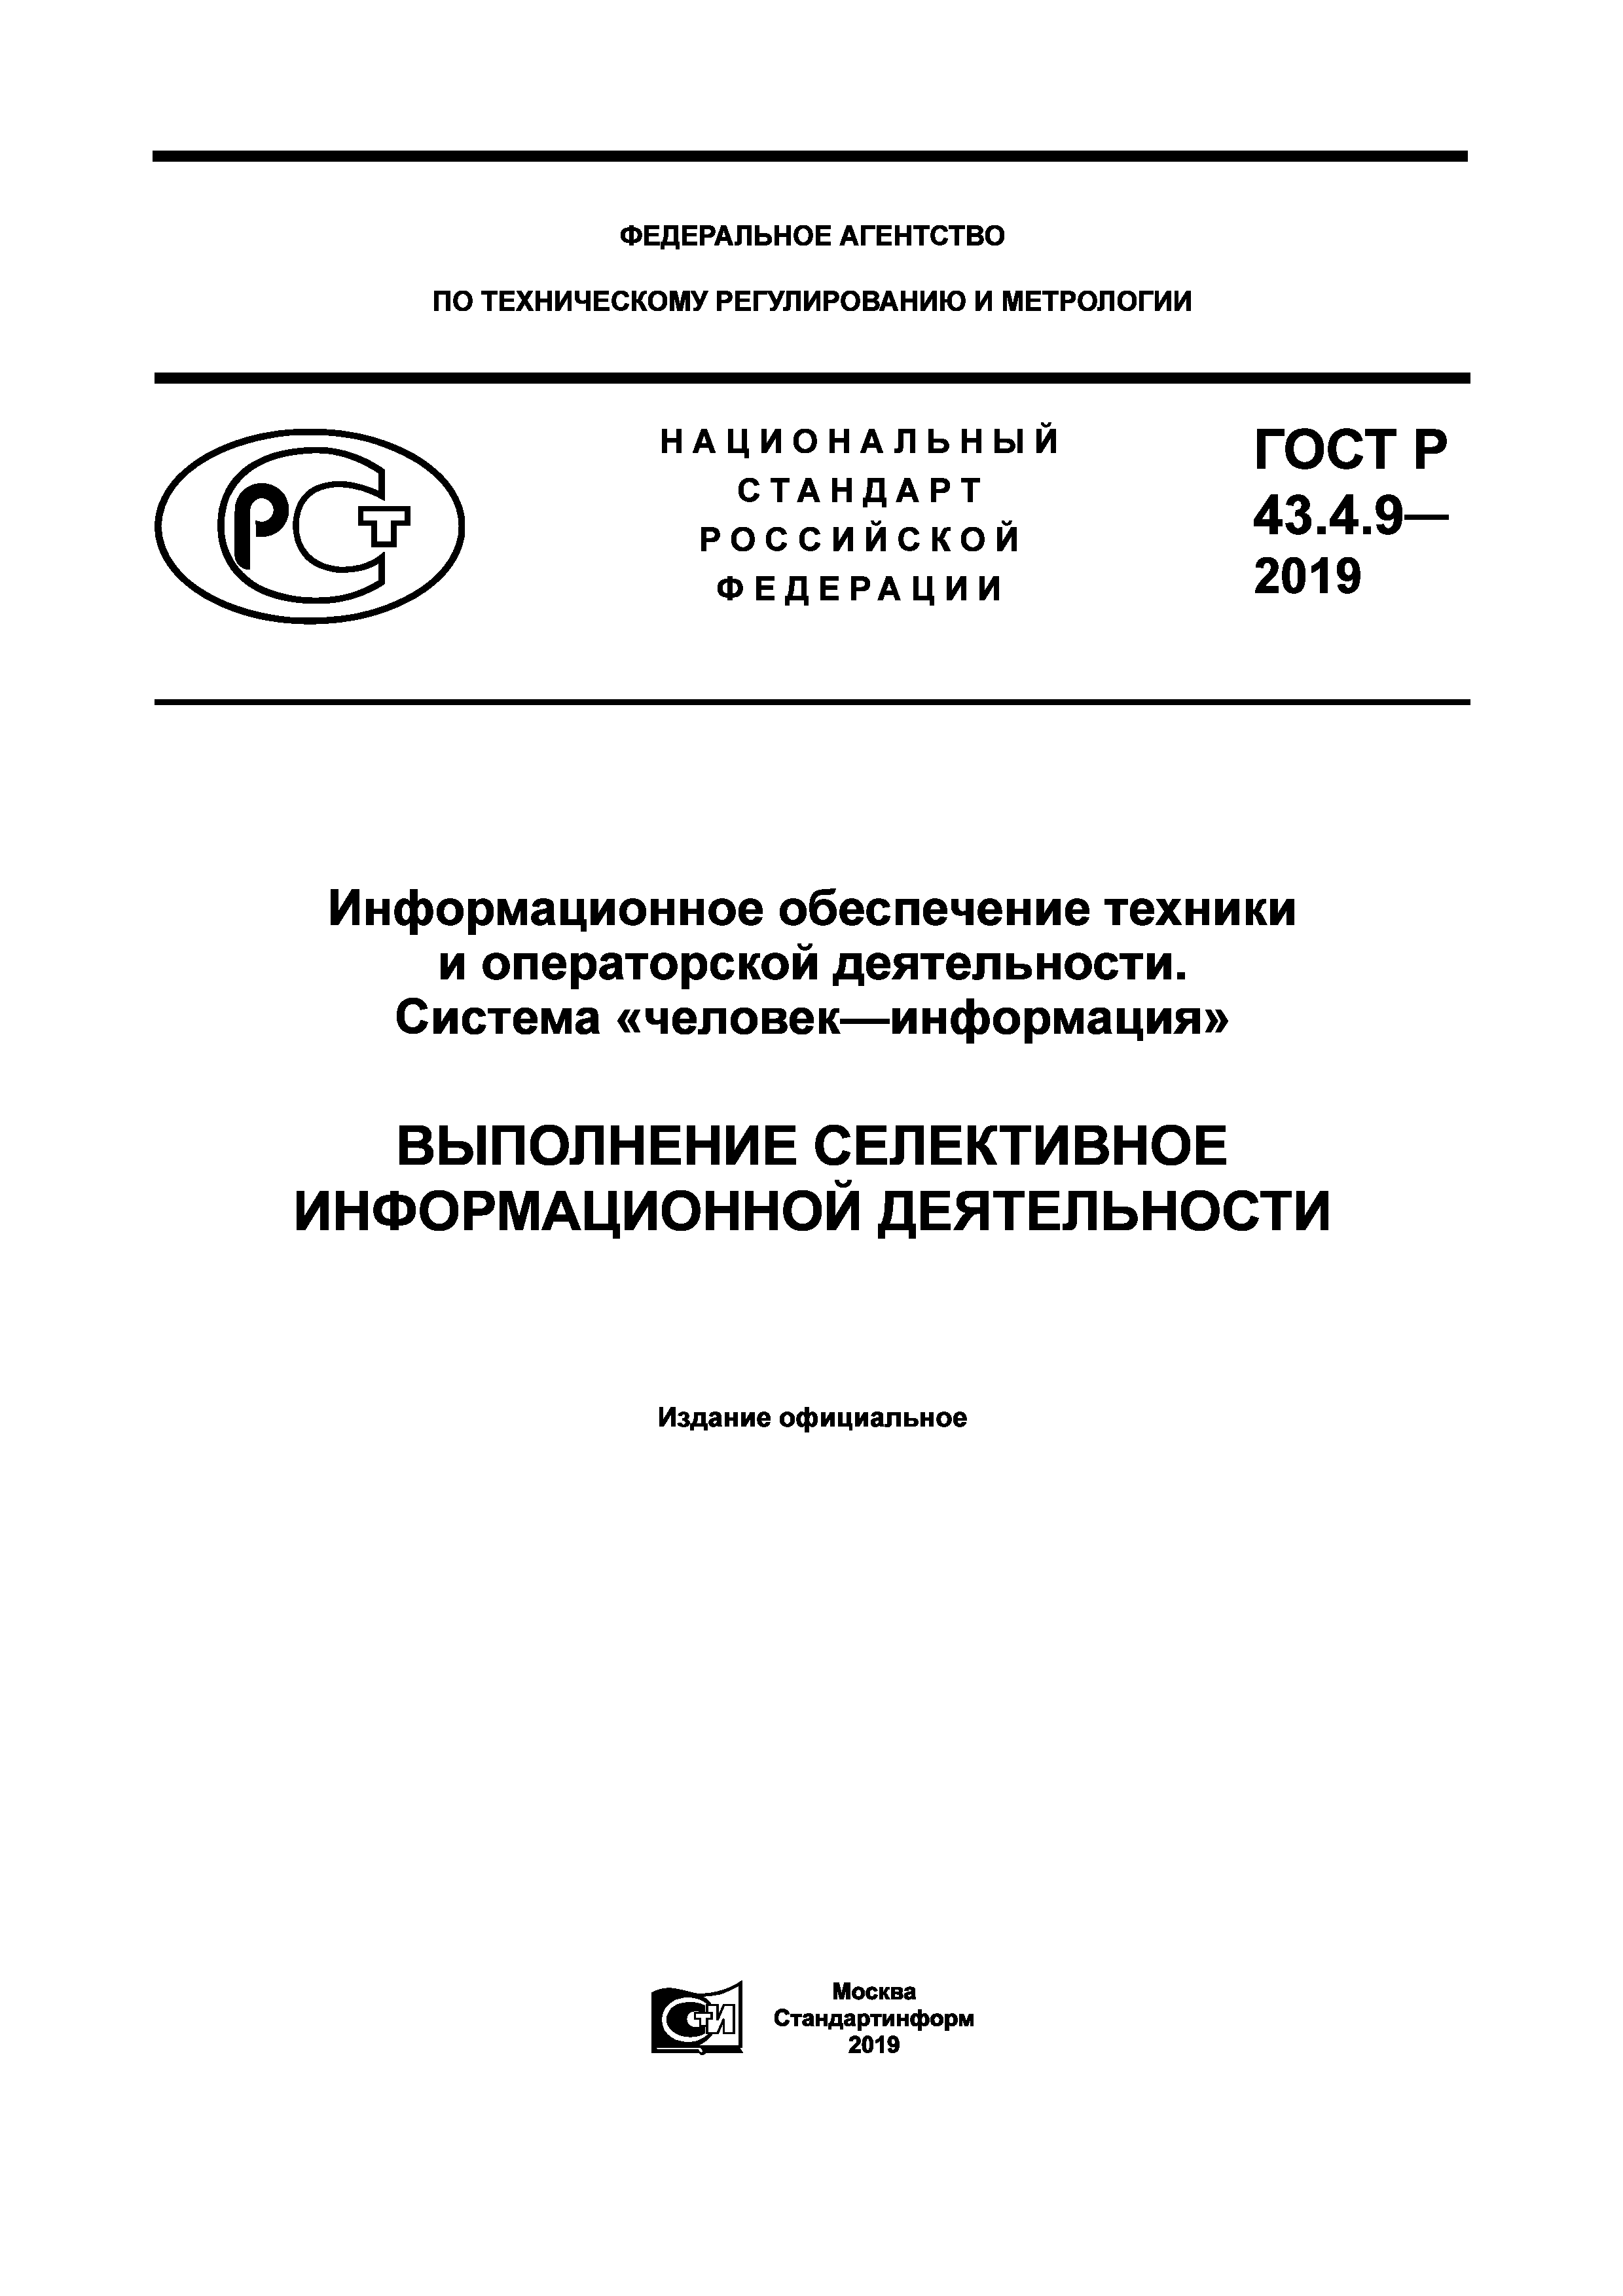 ГОСТ Р 43.4.9-2019